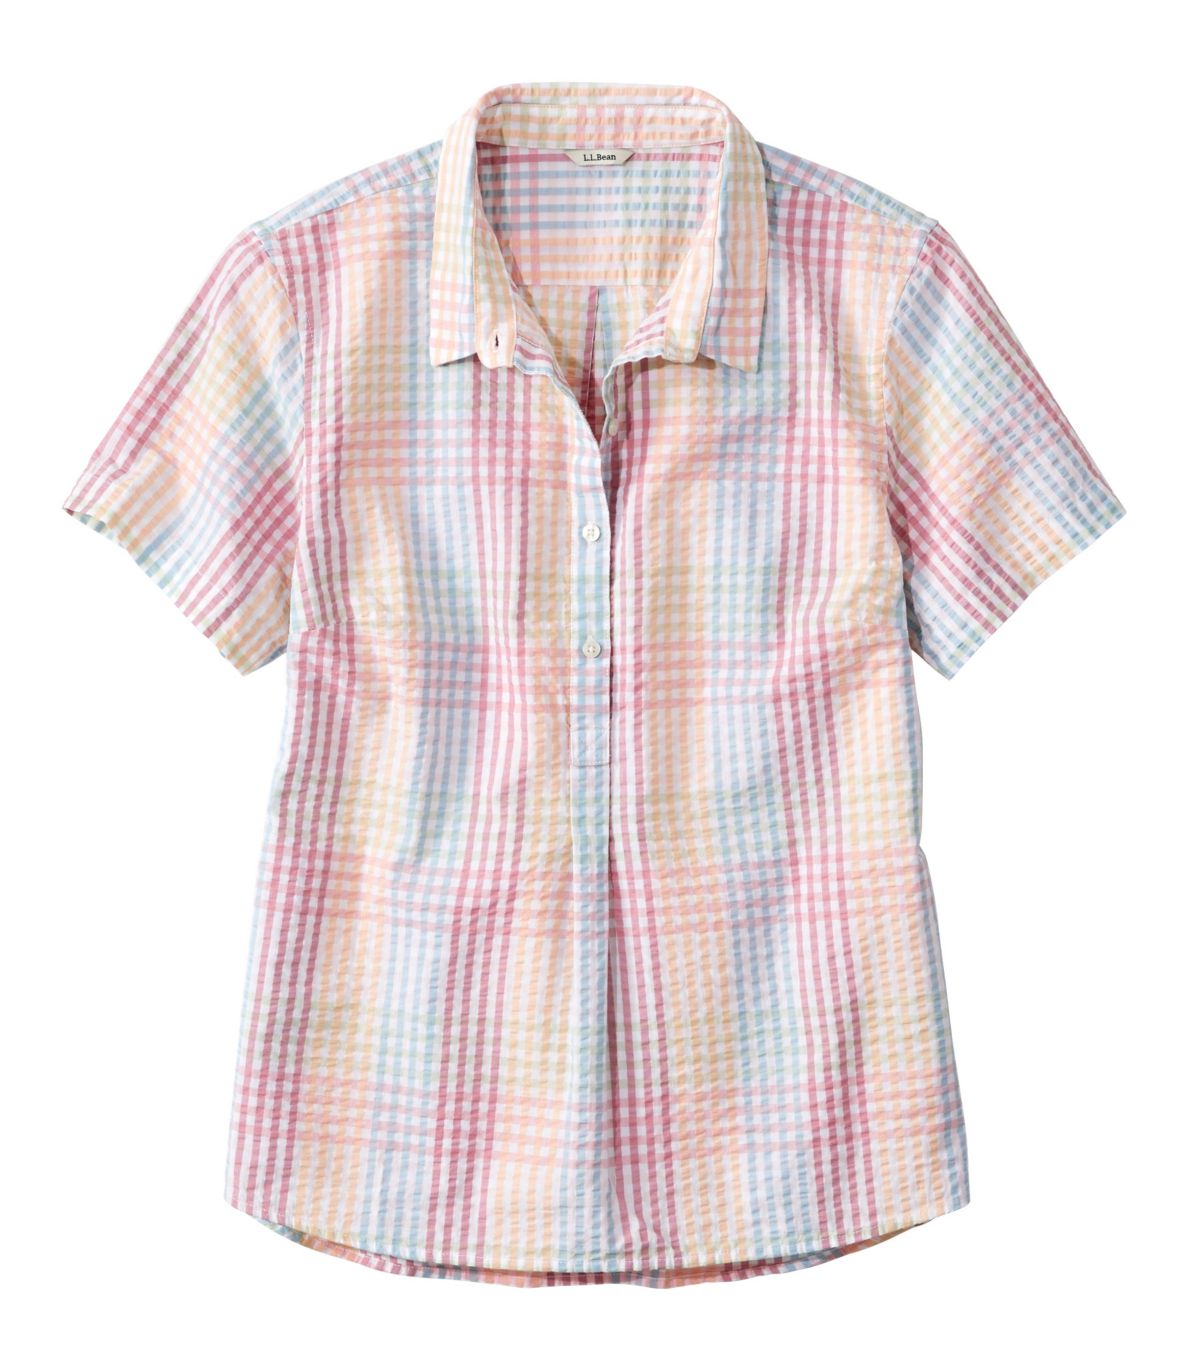 Women's Vacationland Seersucker Shirt, Short-Sleeve Popover Plaid